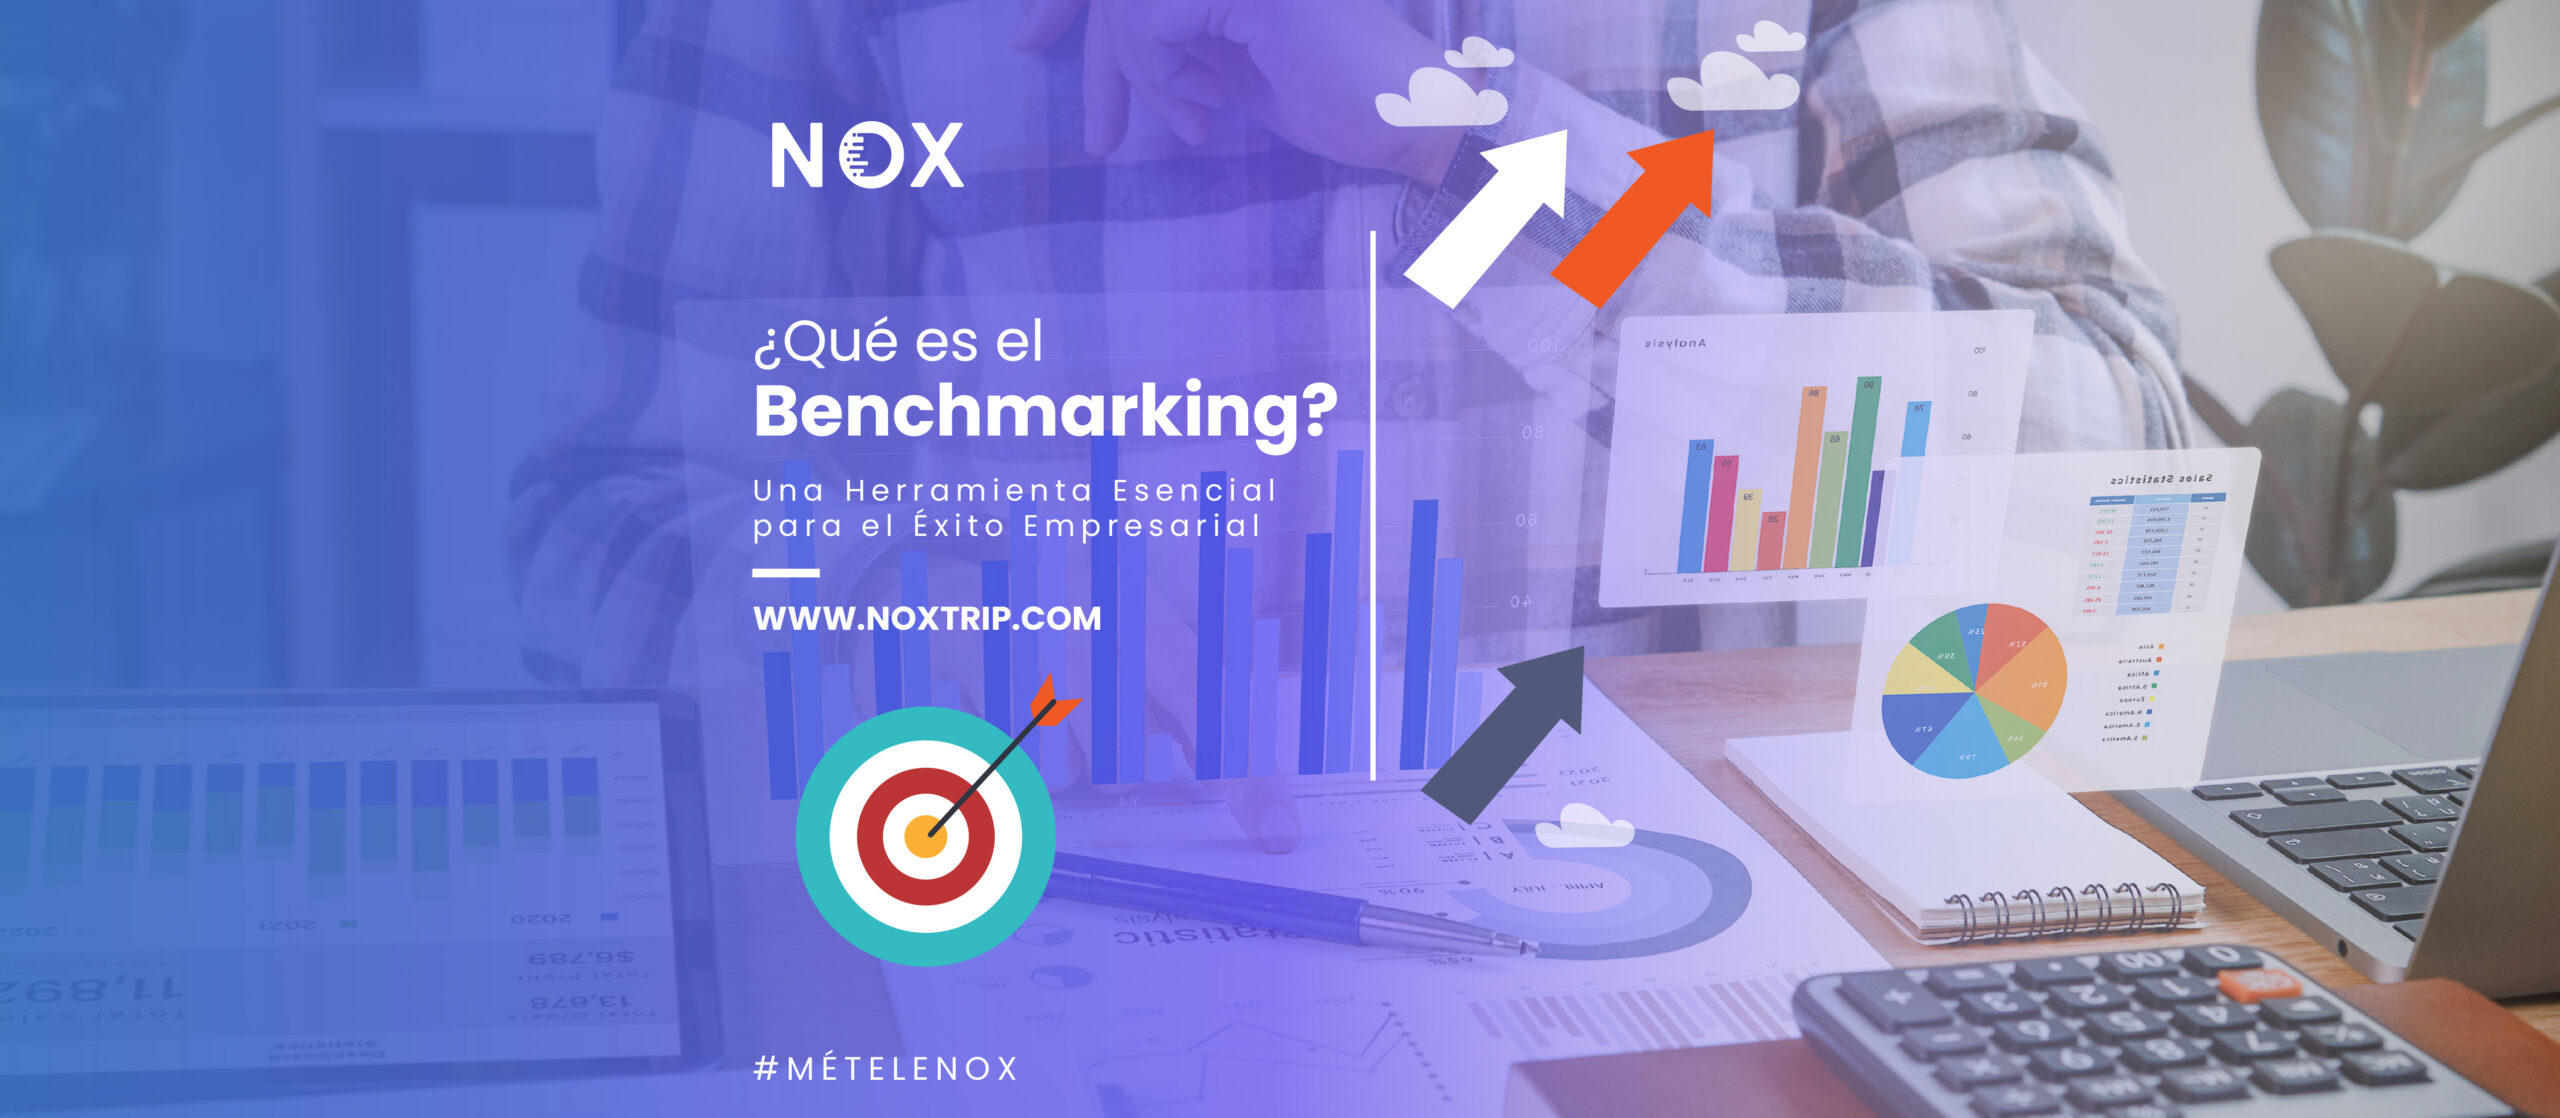 NOX Marketing Digital, benchmarking